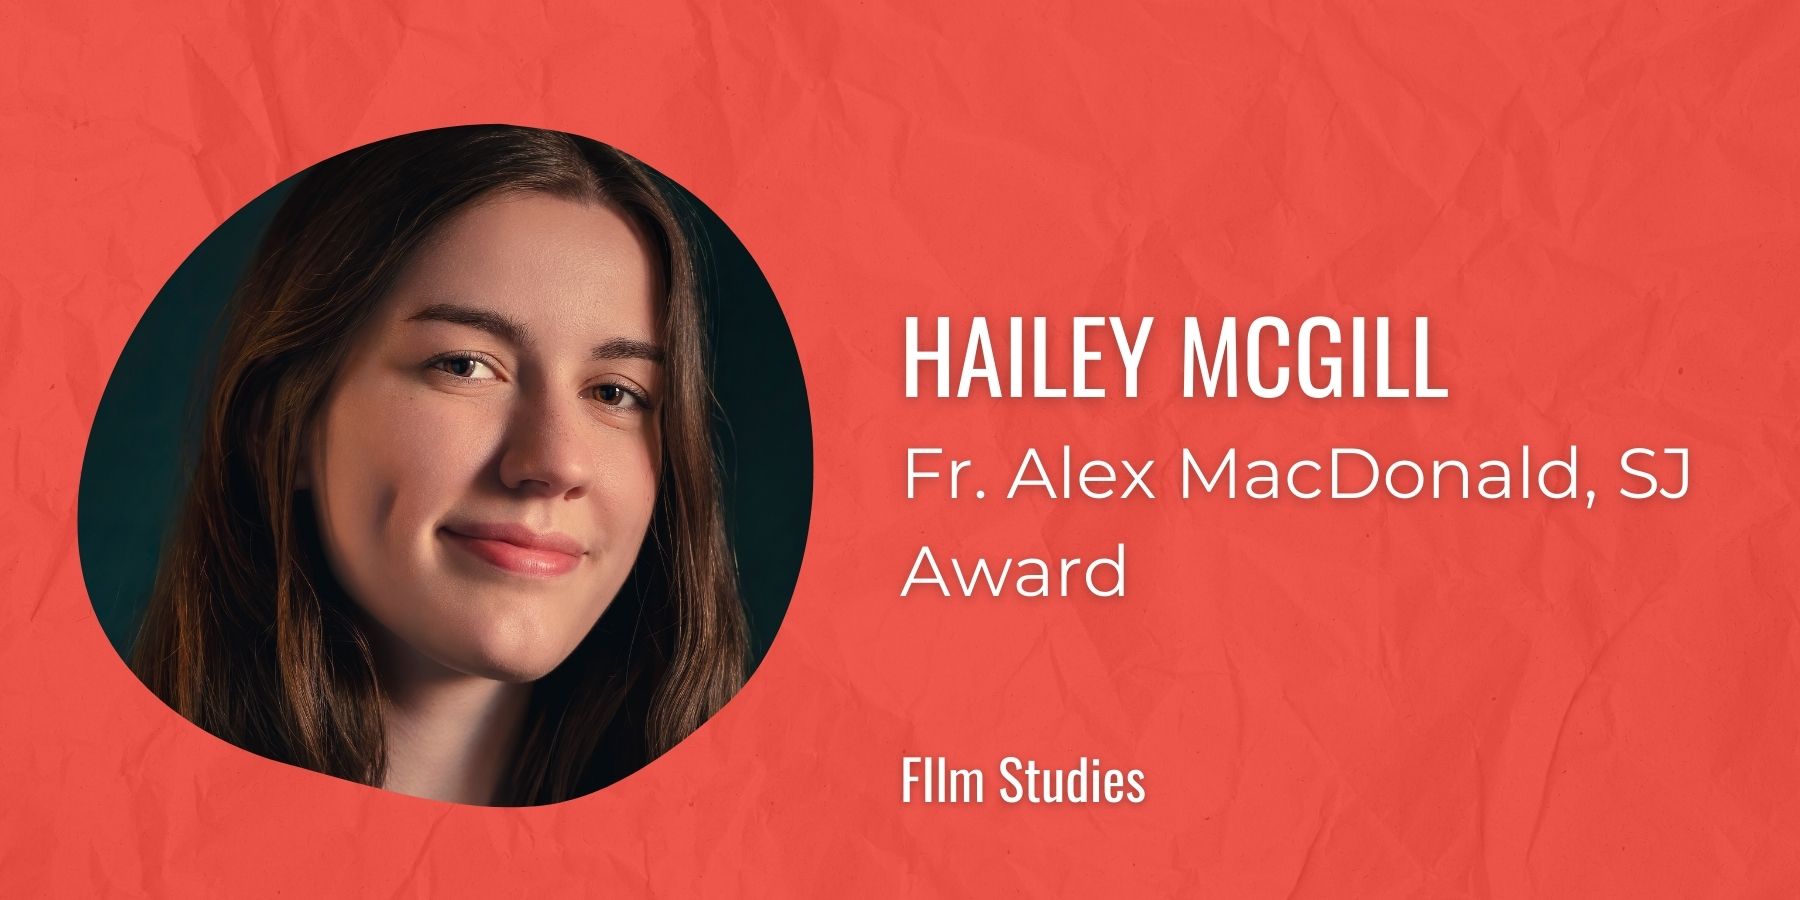 Image of Hailey McGill with text: Fr. Alex MacDonald, SJ Award, FIlm Studies
